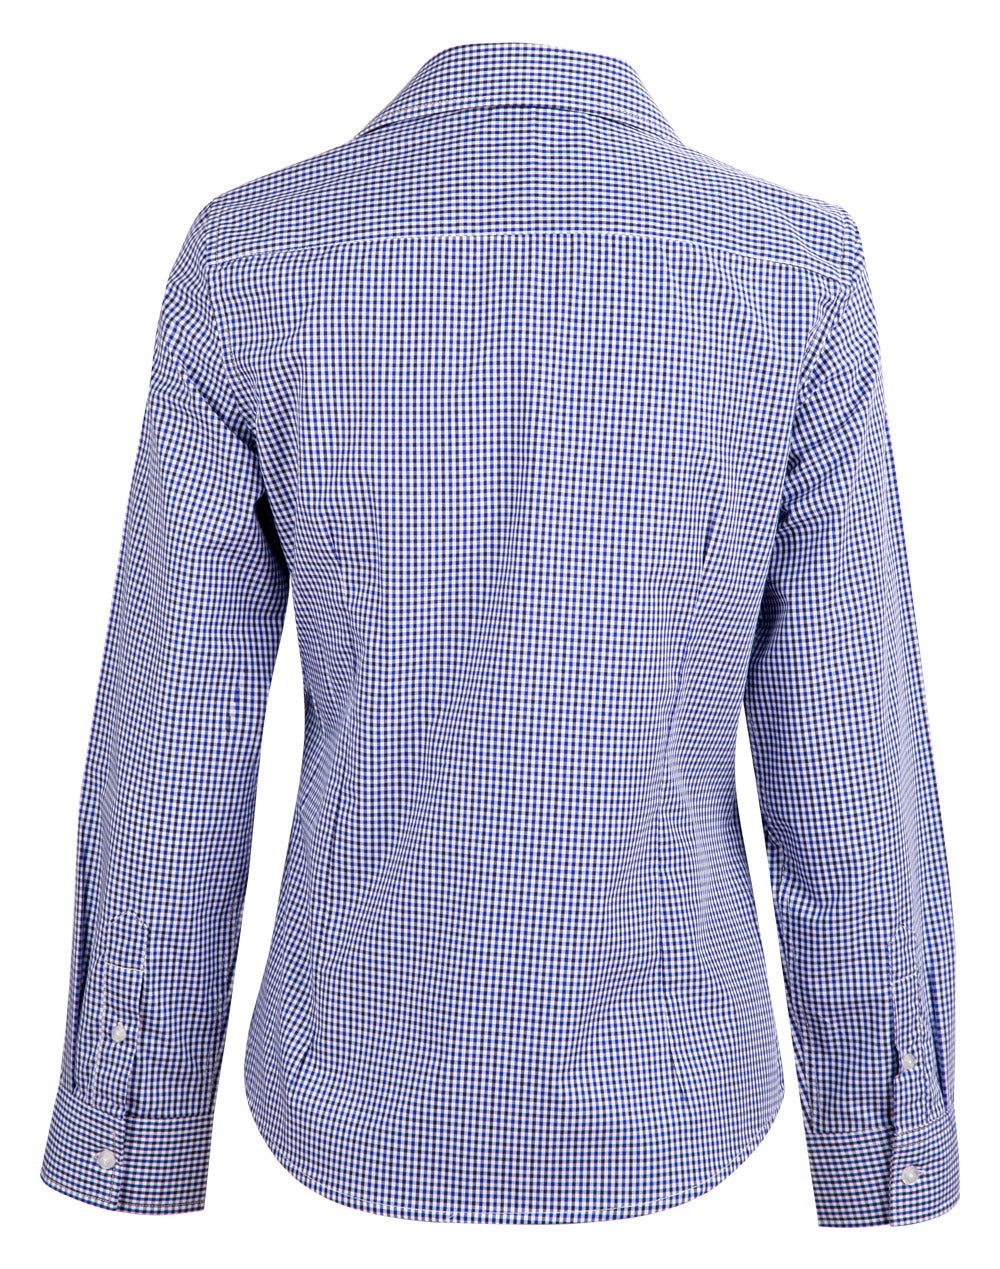 Benchmark M8320L Ladies' Multi-Tone Check Long Sleeve Shirt